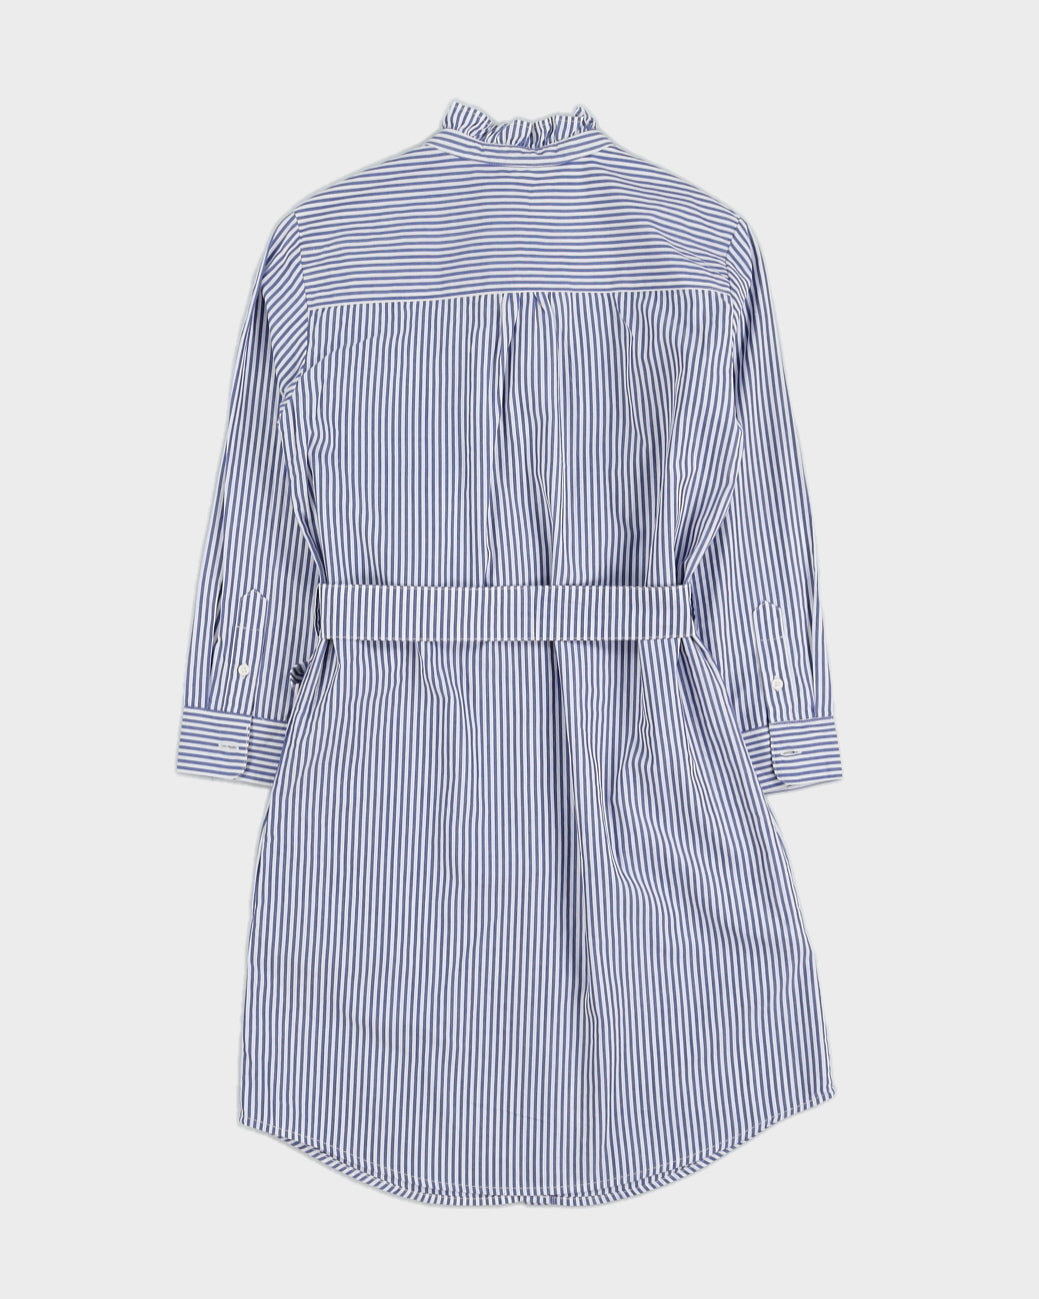 Burberry Blue Striped Shirt Dress - S